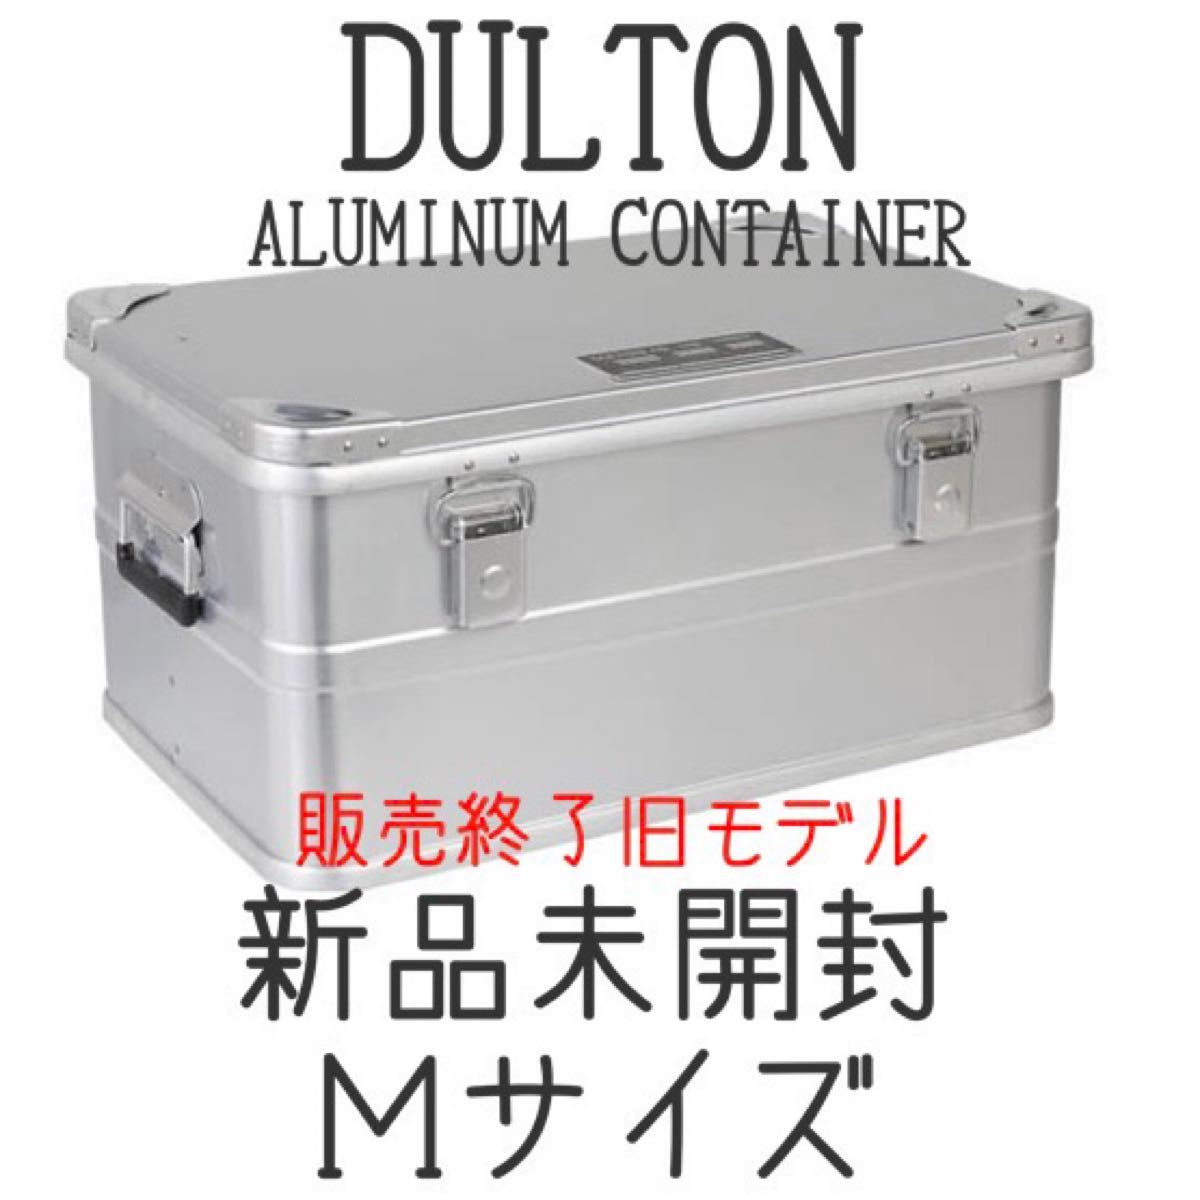 DULTON ダルトン 旧型アルミコンテナ M 未使用品 jasic.com.vn